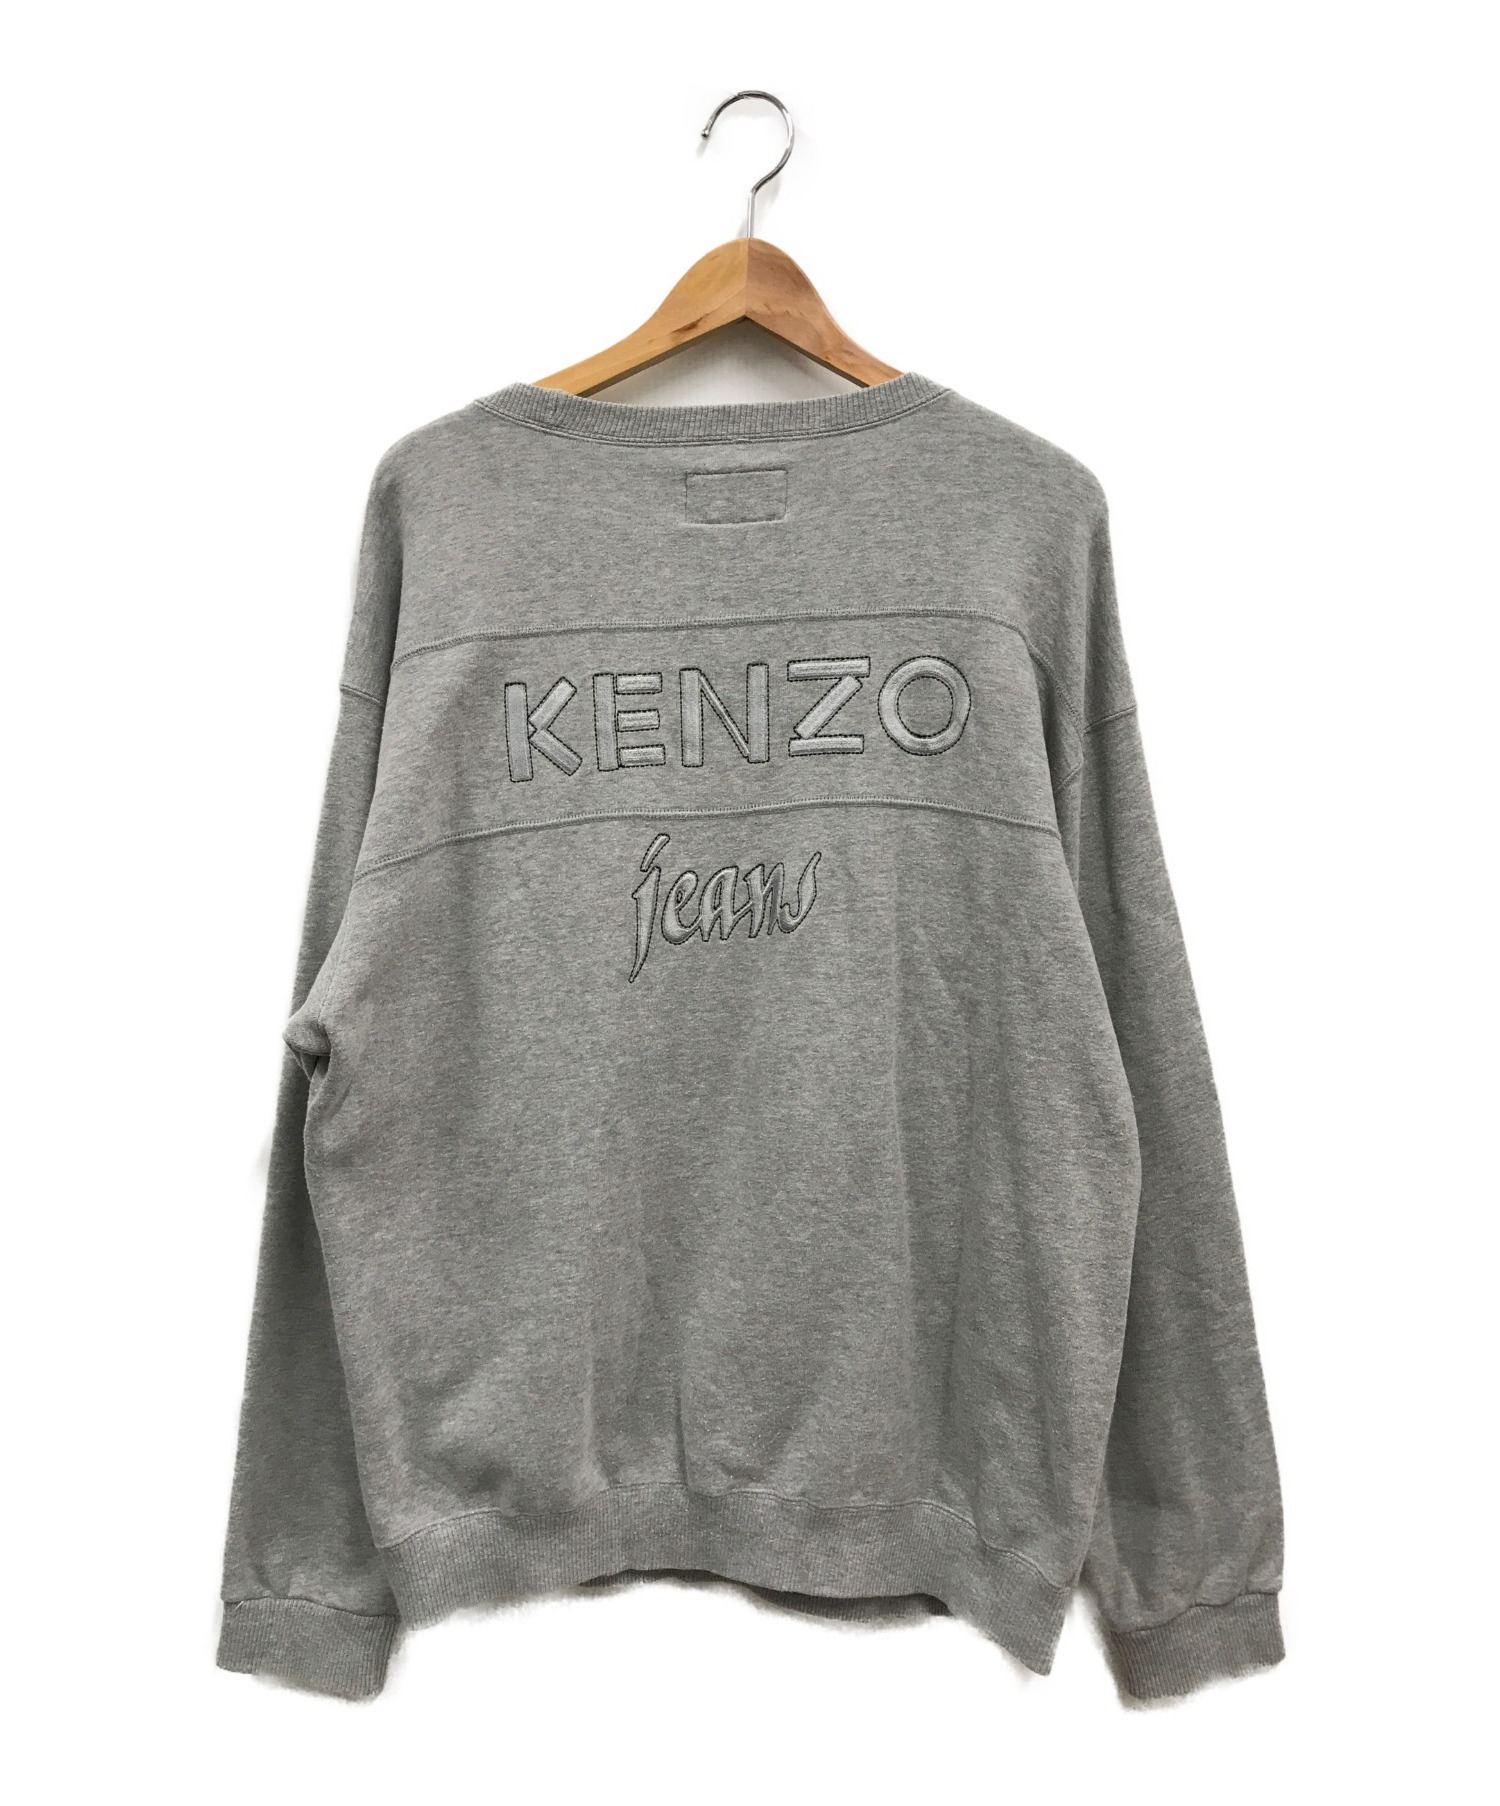 KENZO JEANS (ケンゾージーンズ) 90'sロゴスウェット グレー サイズ:FREE 90年代